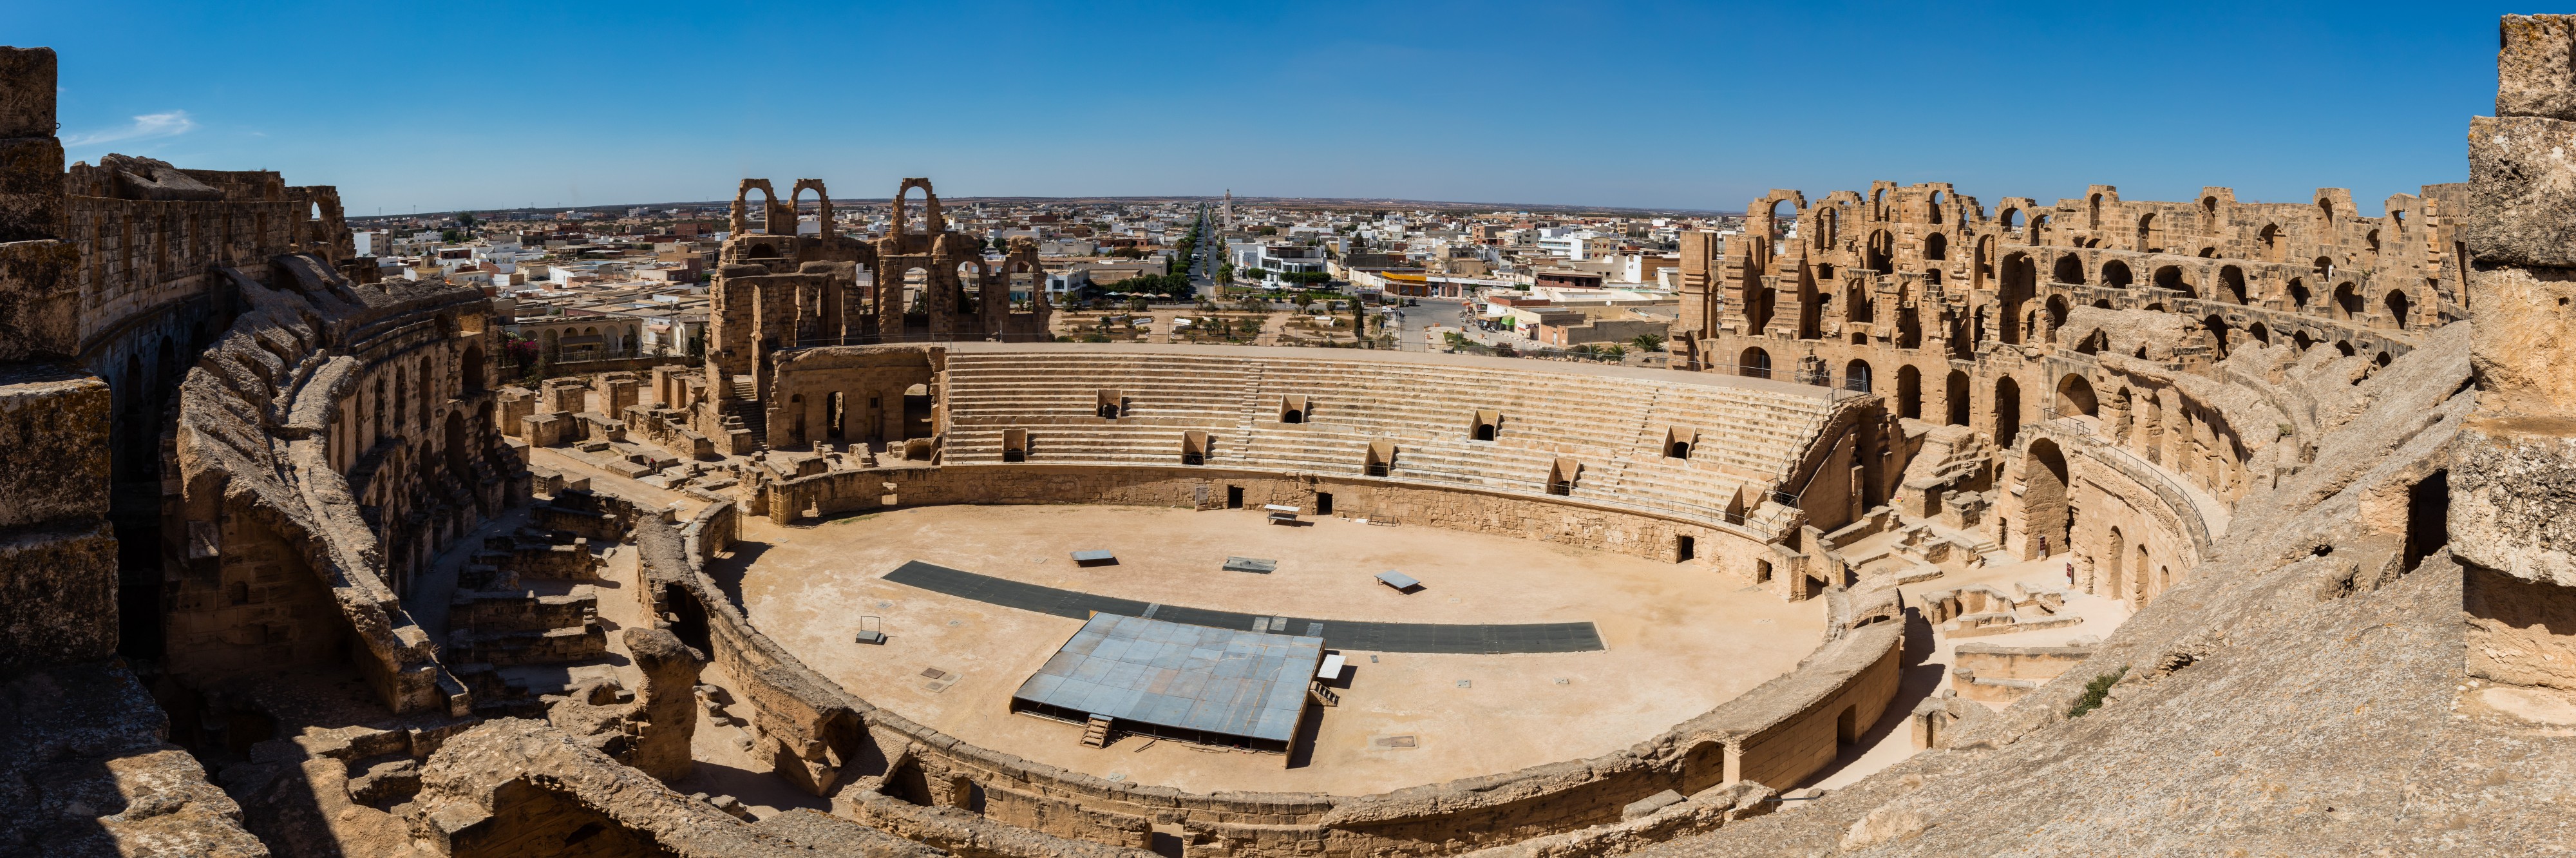 Anfiteatro, El Jem, Túnez, 2016-09-04, DD 12-15 PAN